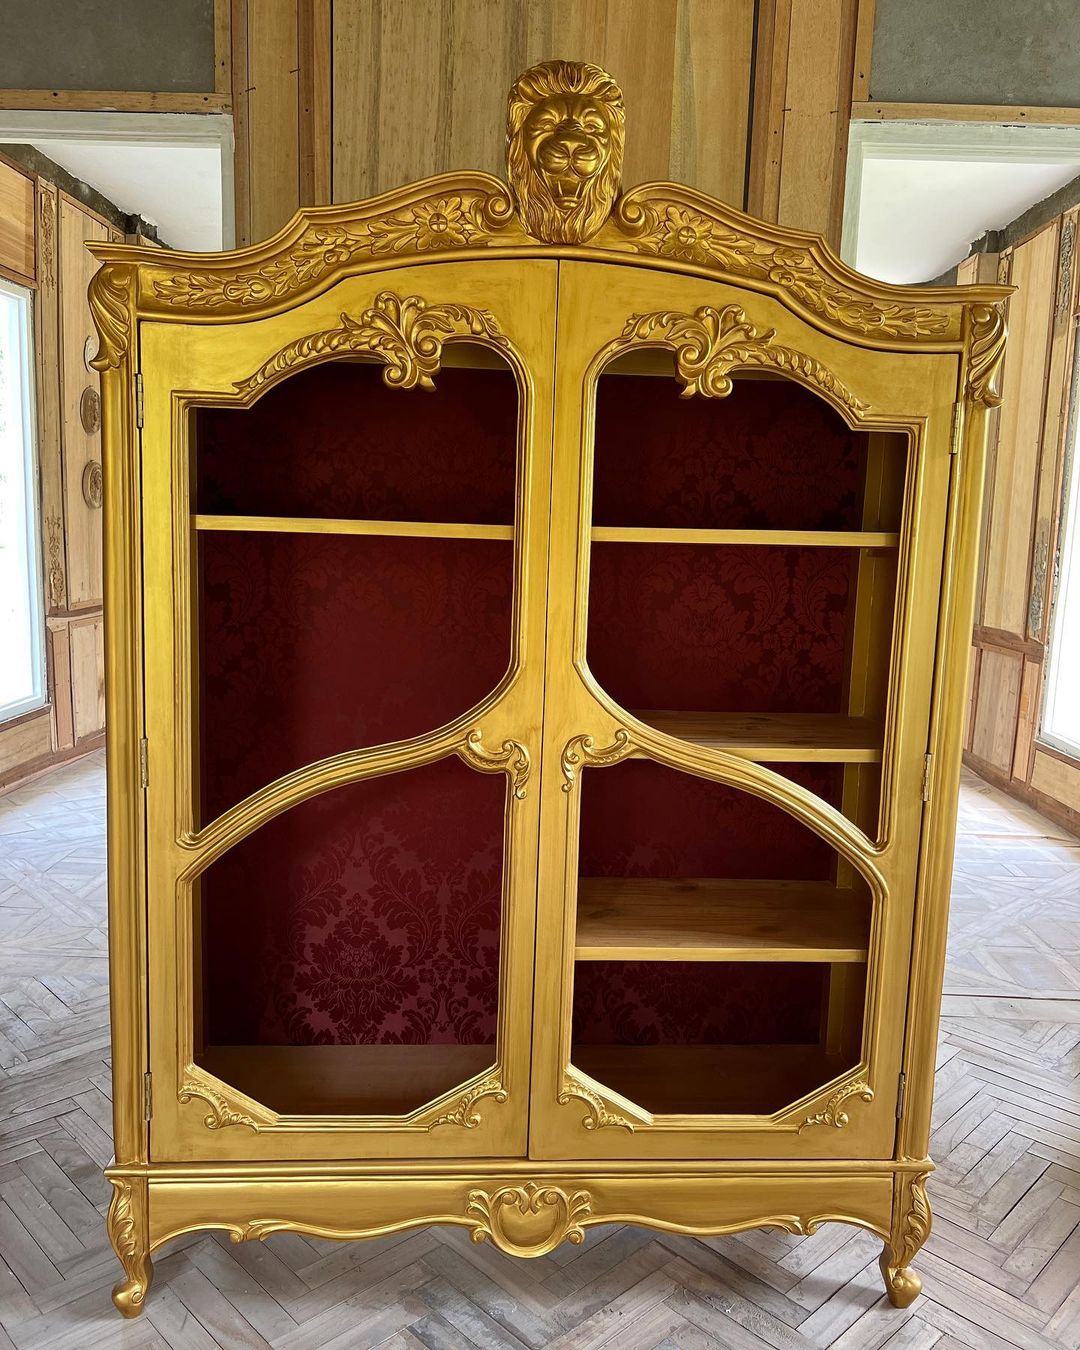 Rococo armoire with lion cartouche